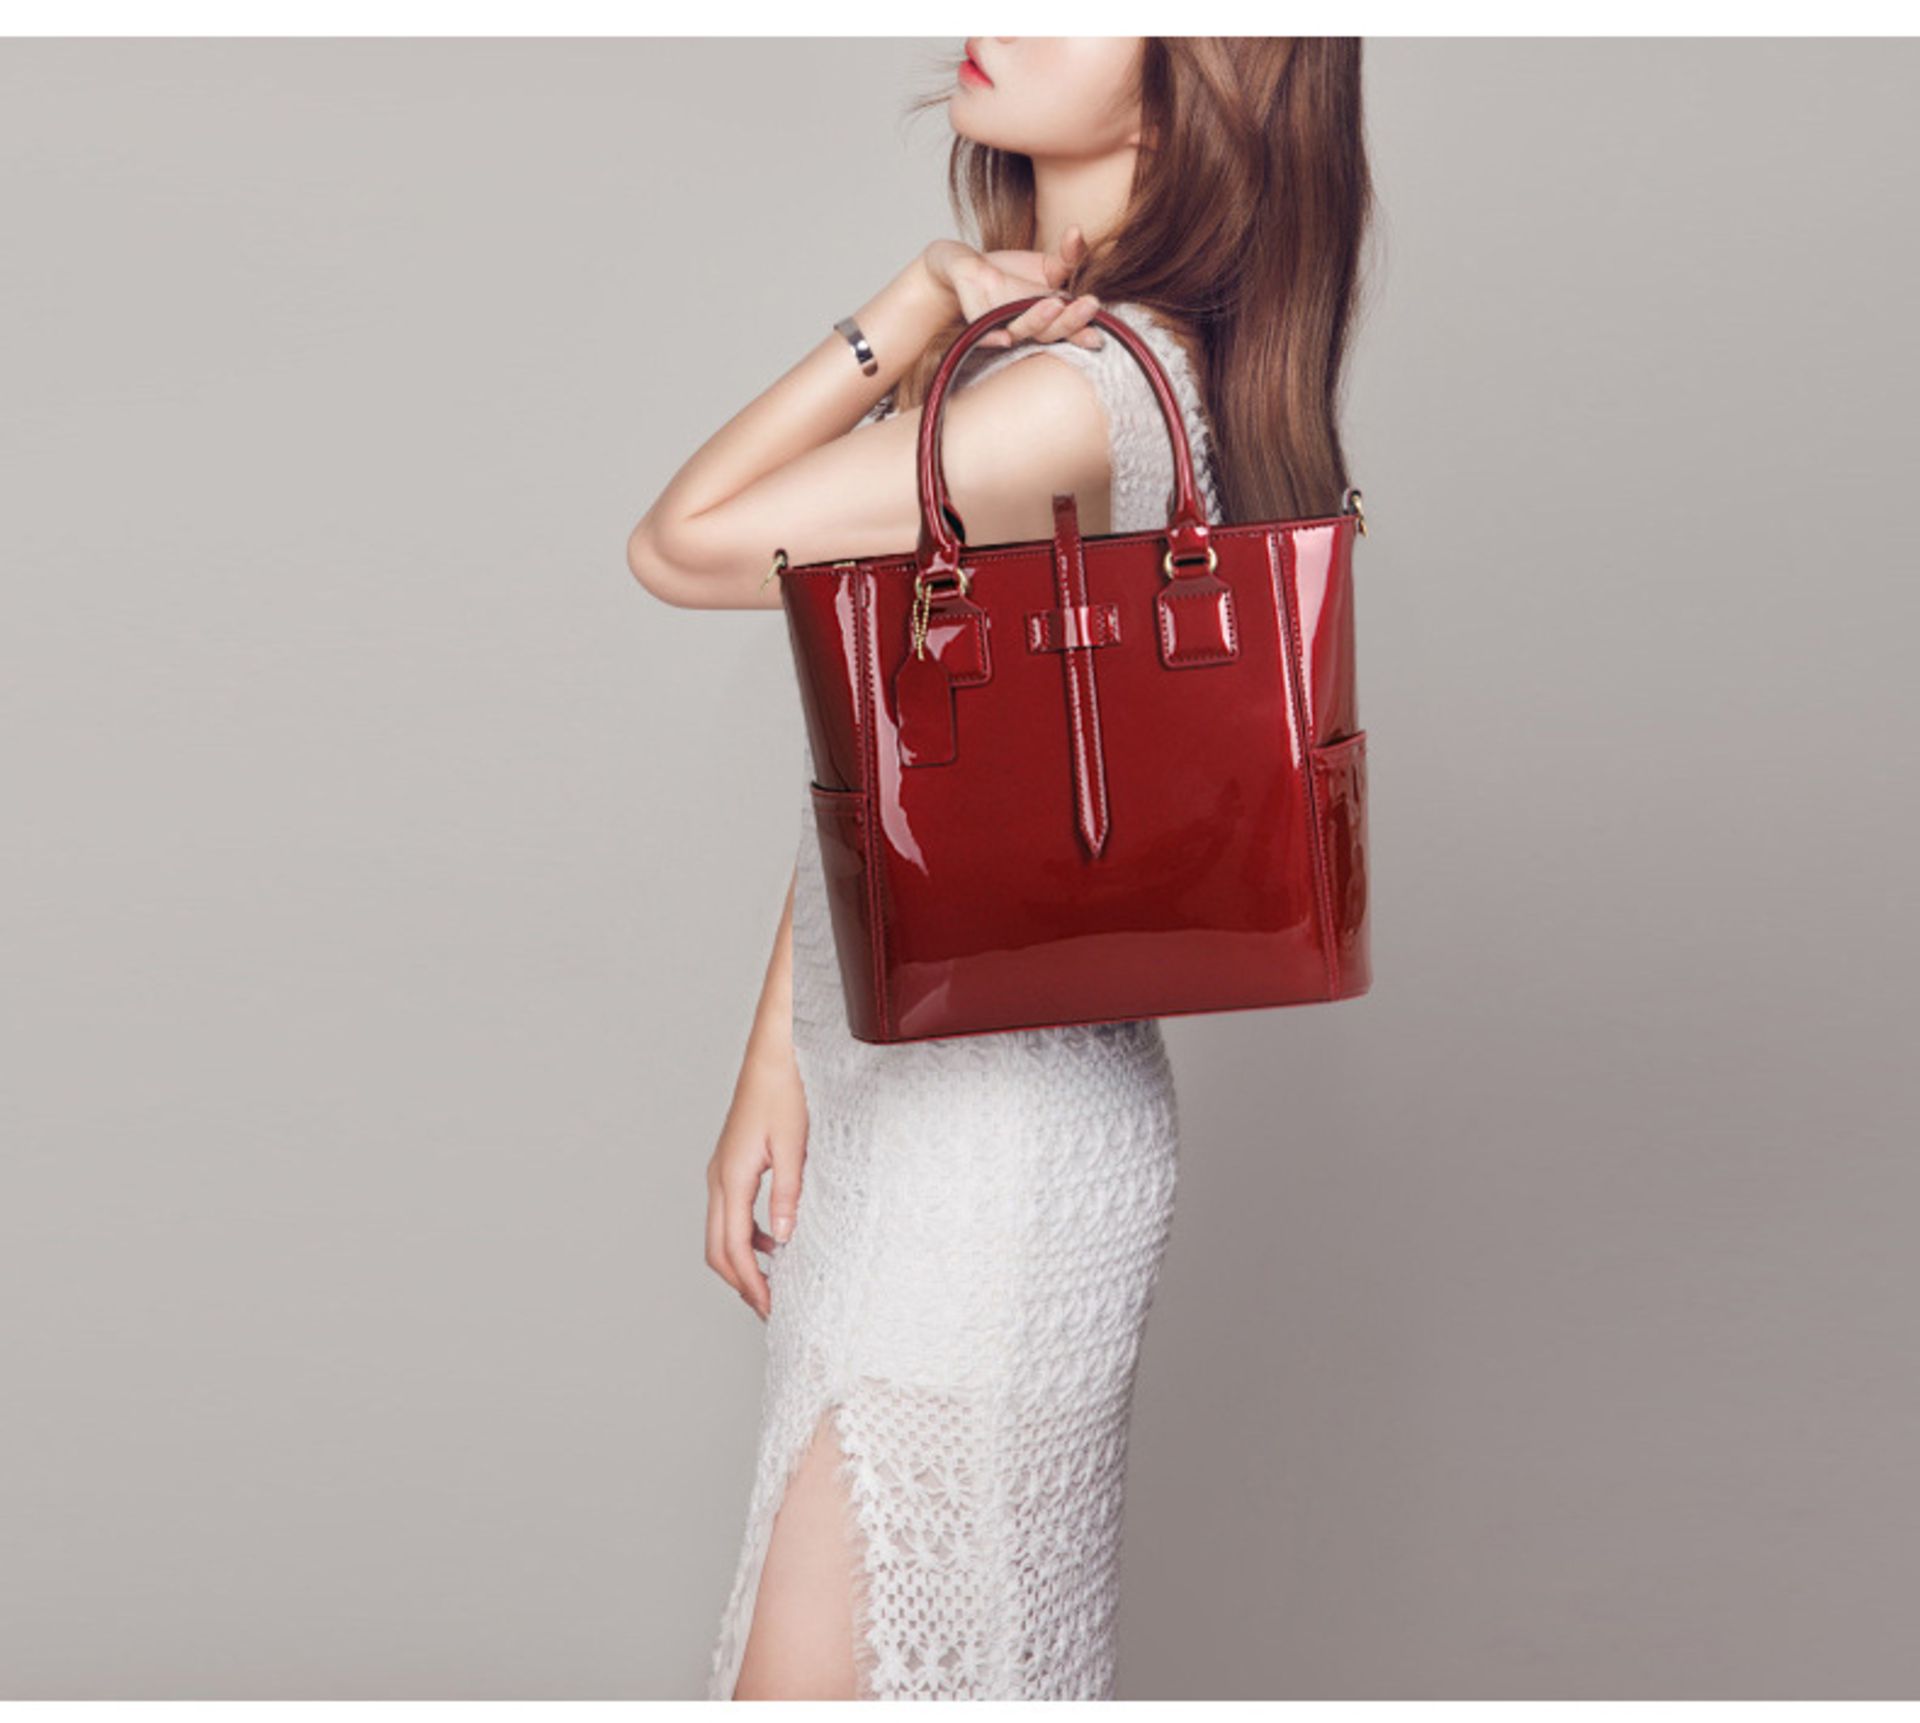 Brand New Black Three Piece Fashion Bag Set Inc Large Handbag / Clutch Evening Bag And Small Card - Image 3 of 4